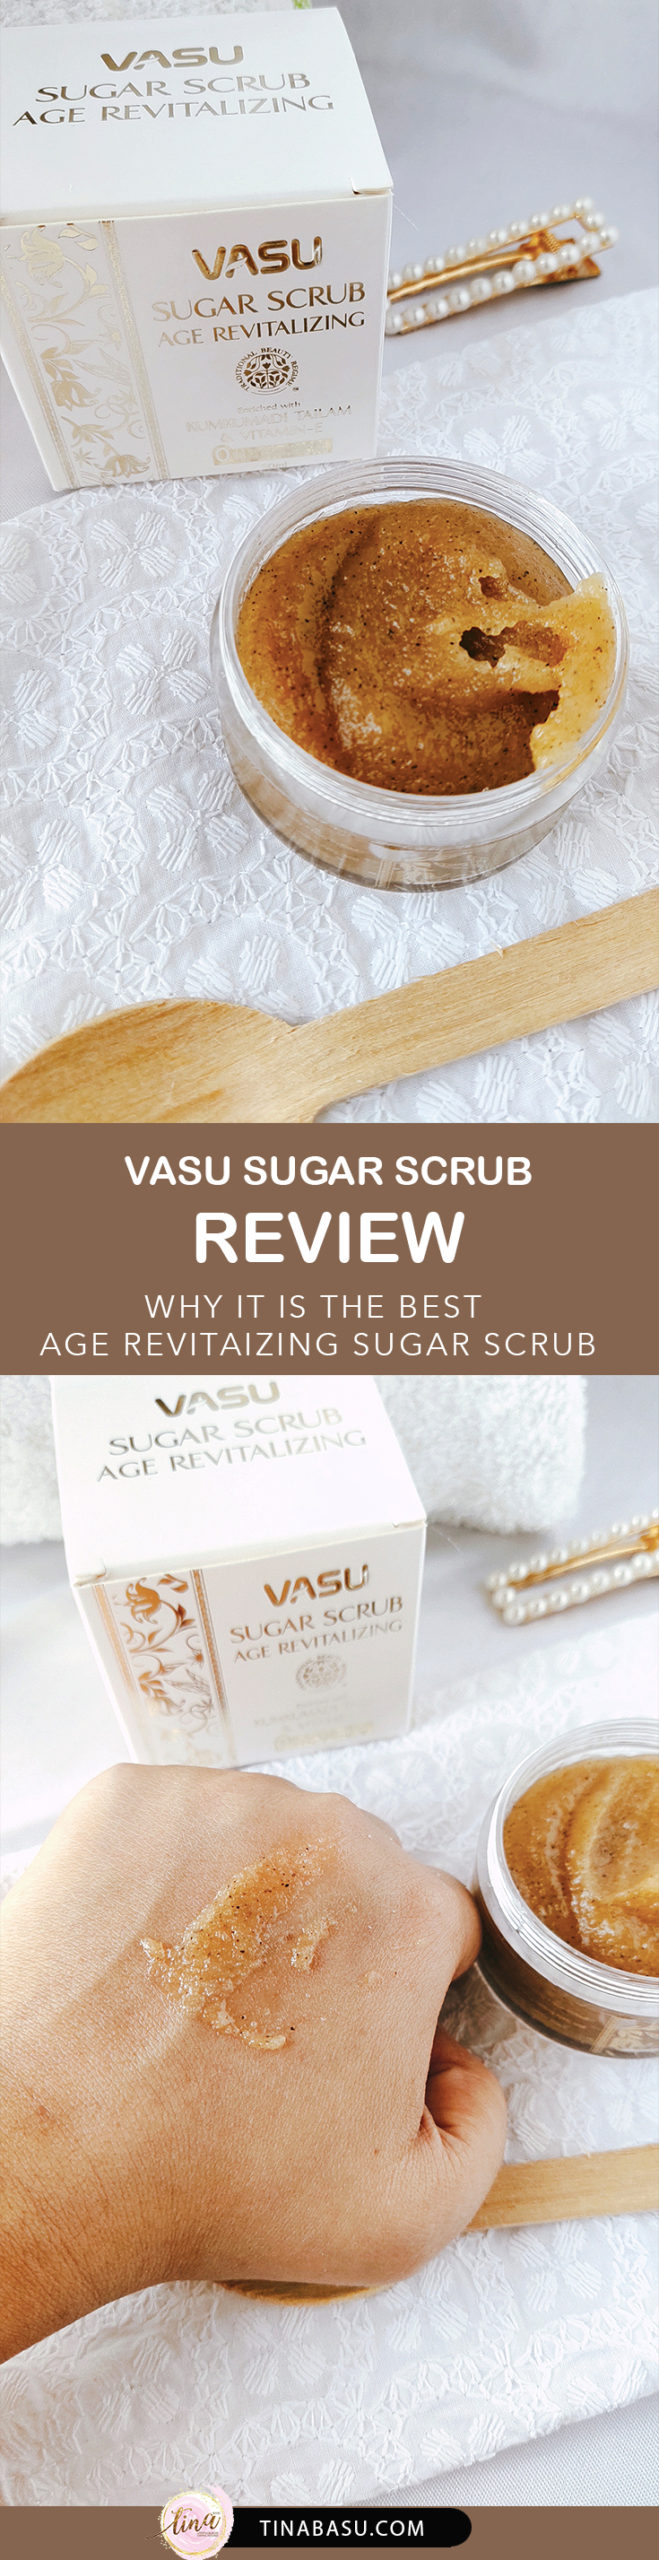 vasu sugar scrub product review 